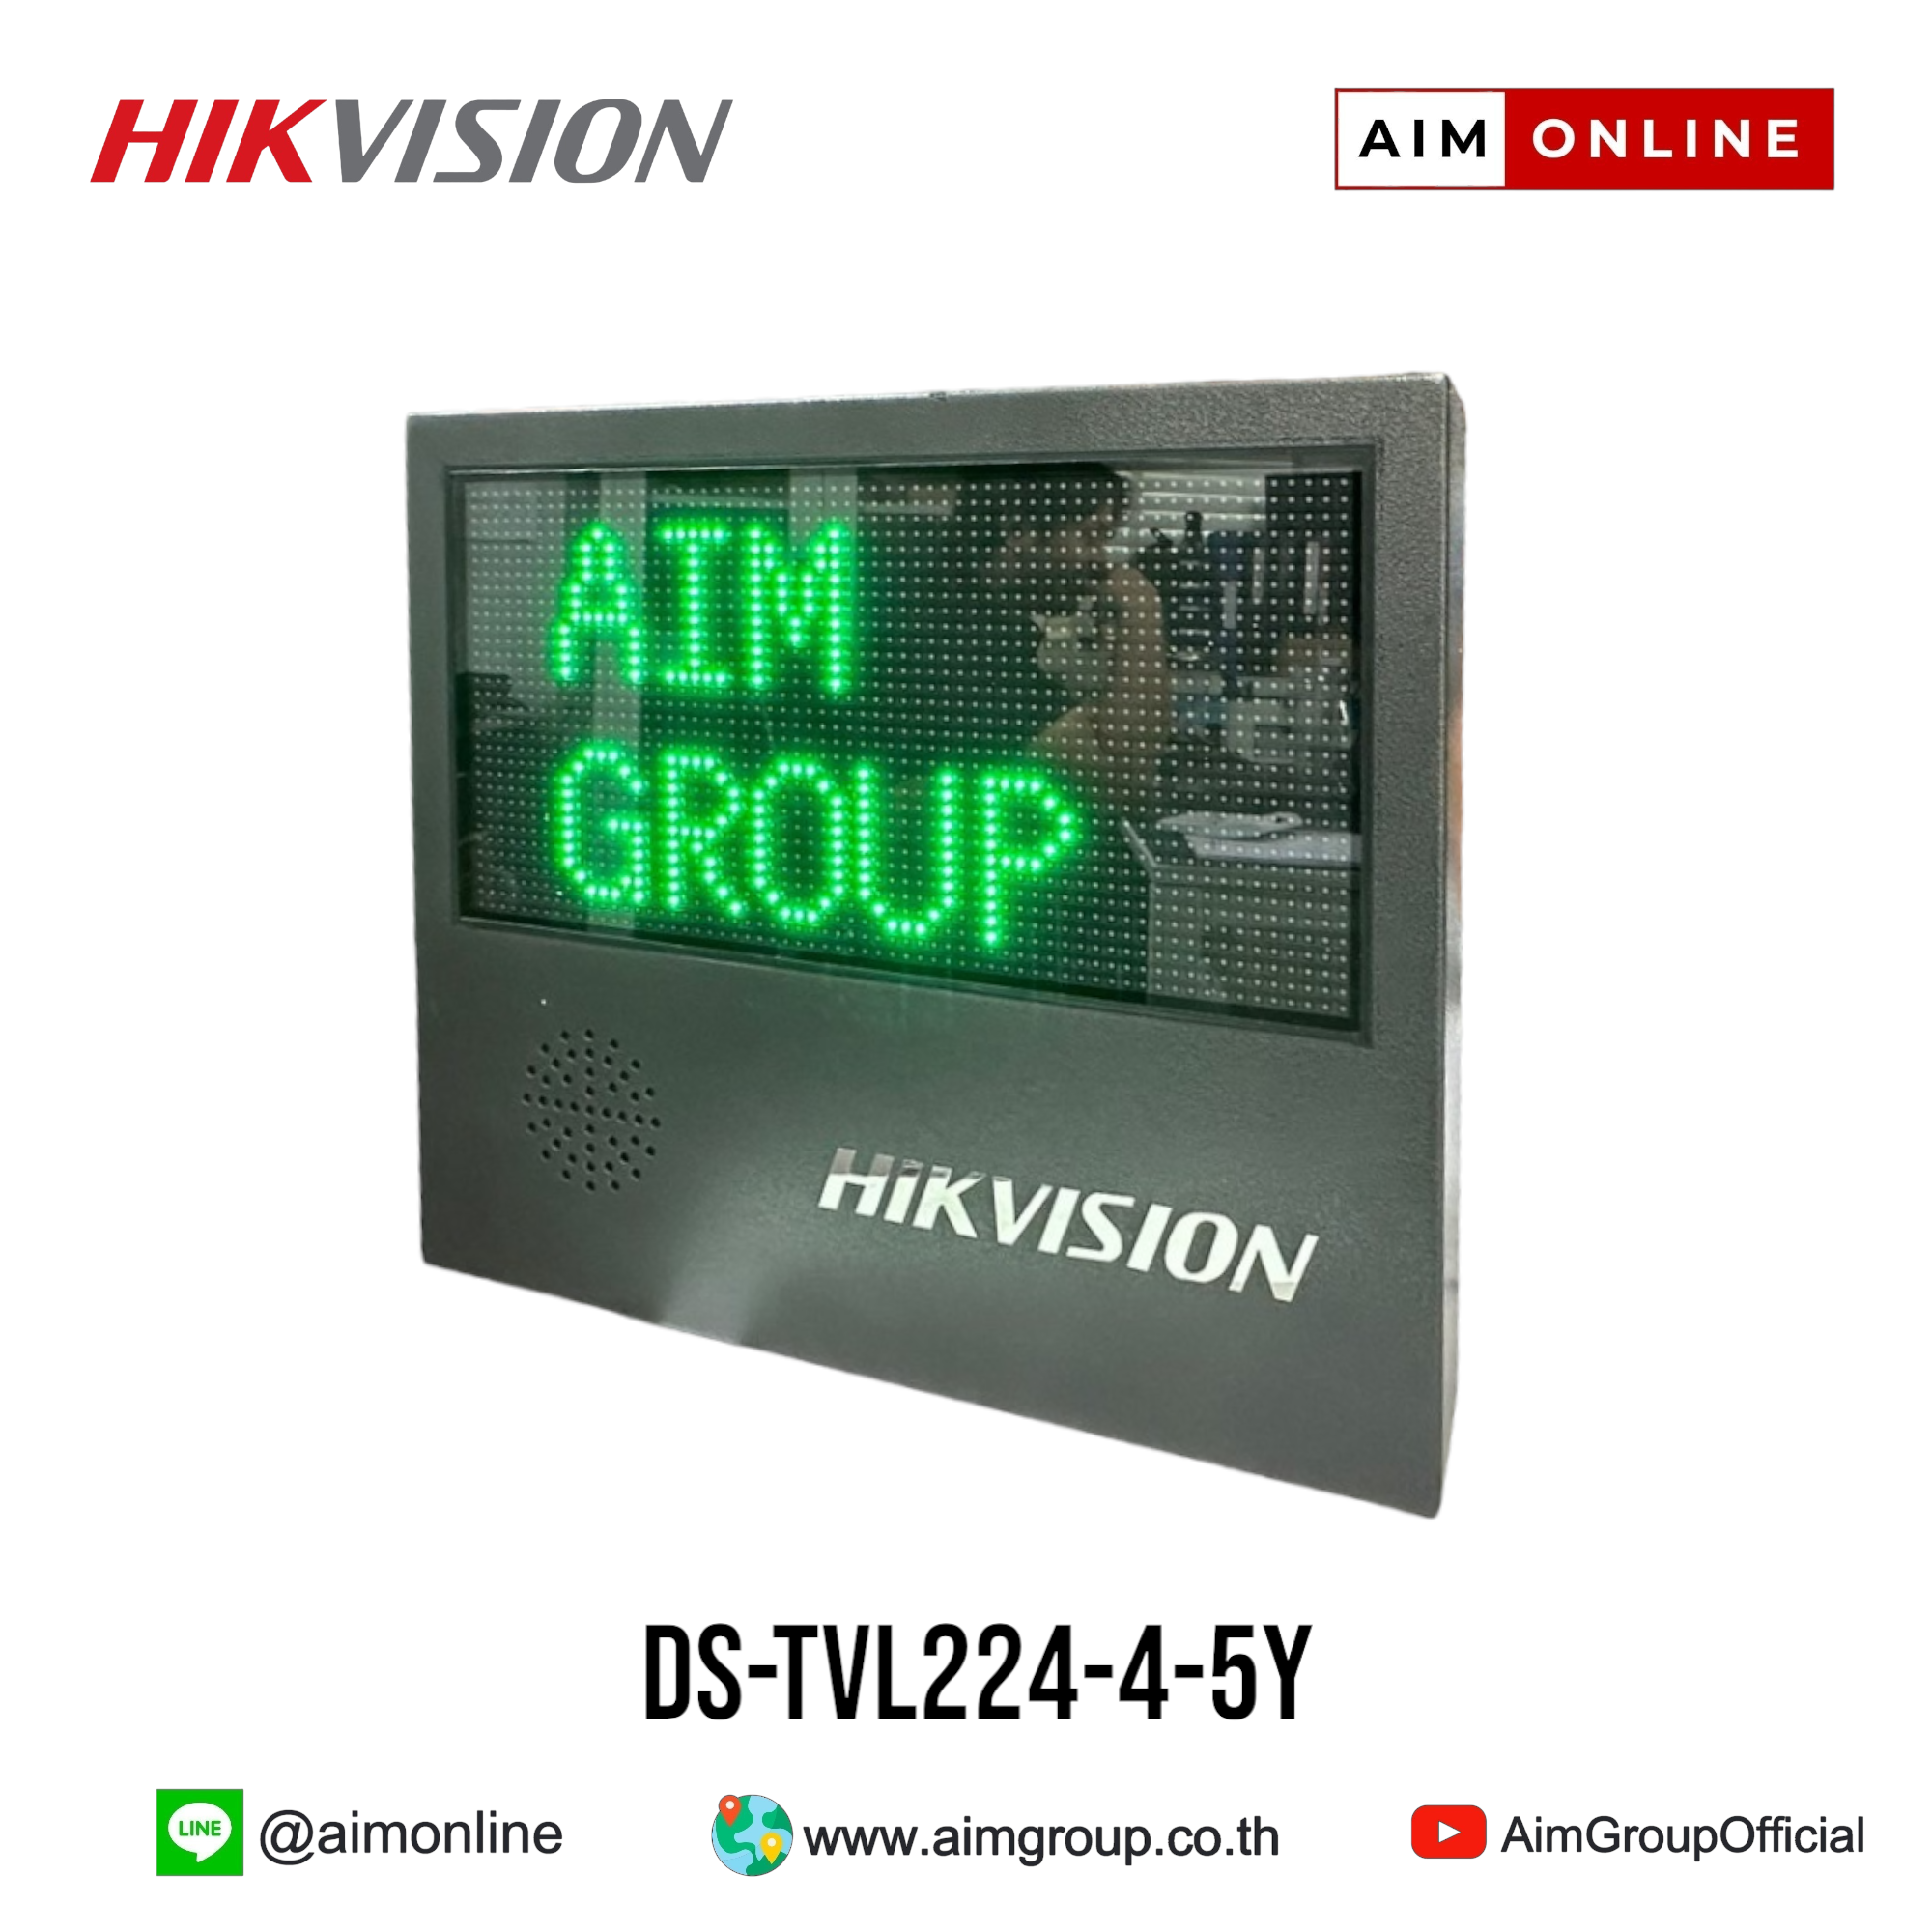 HIKVISION รุ่น DS-TVL224-4-5Y ราคาพิเศษ 12